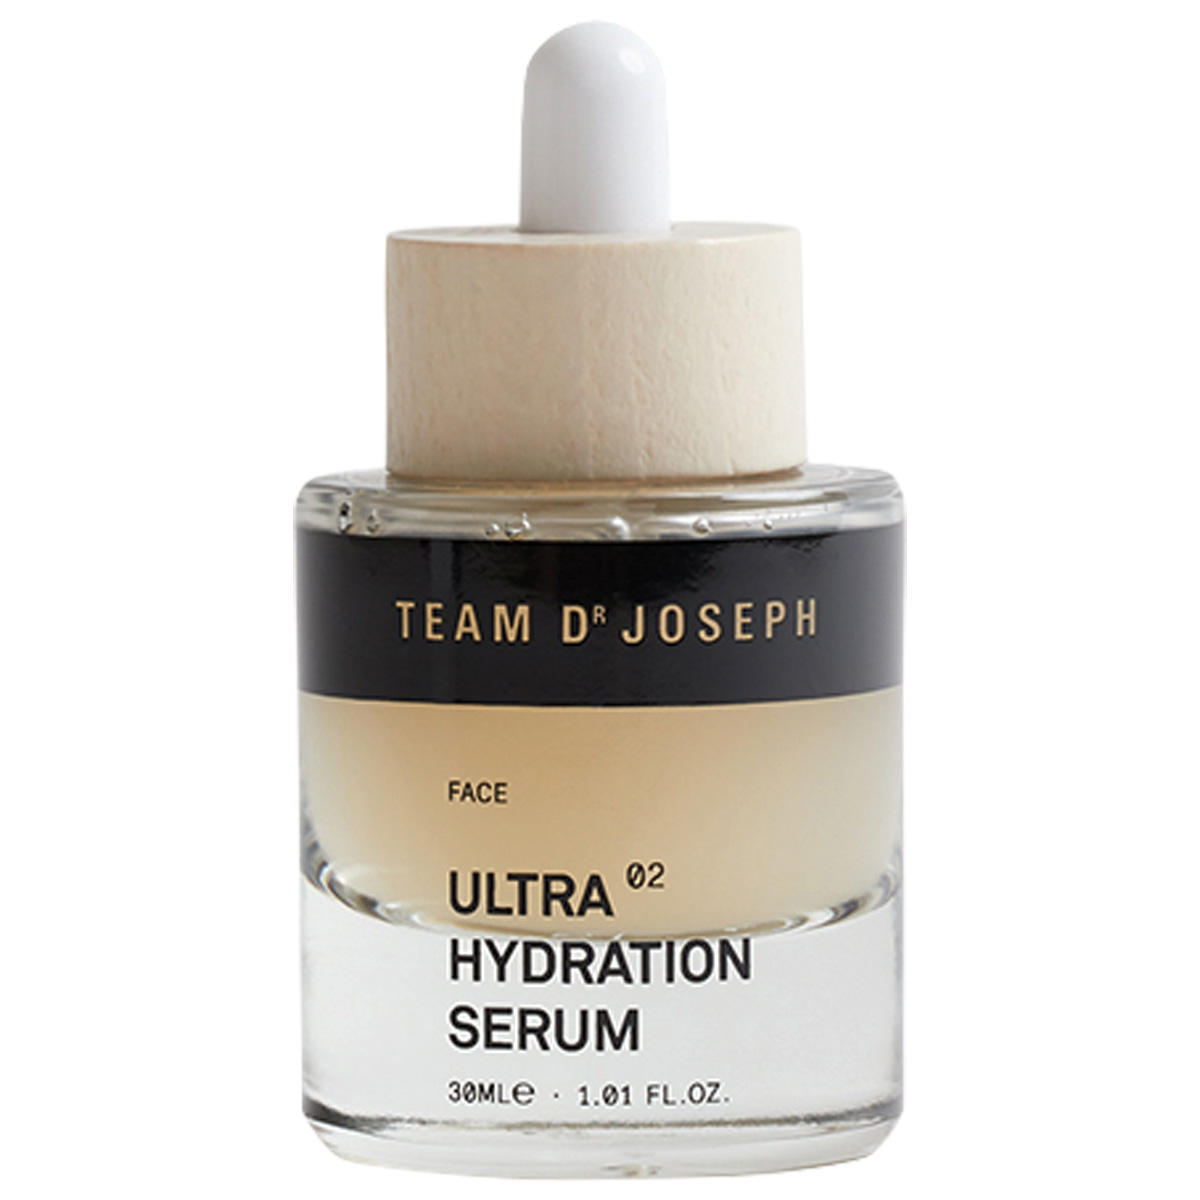 TEAM DR JOSEPH Ultra Hydration Serum  - 1